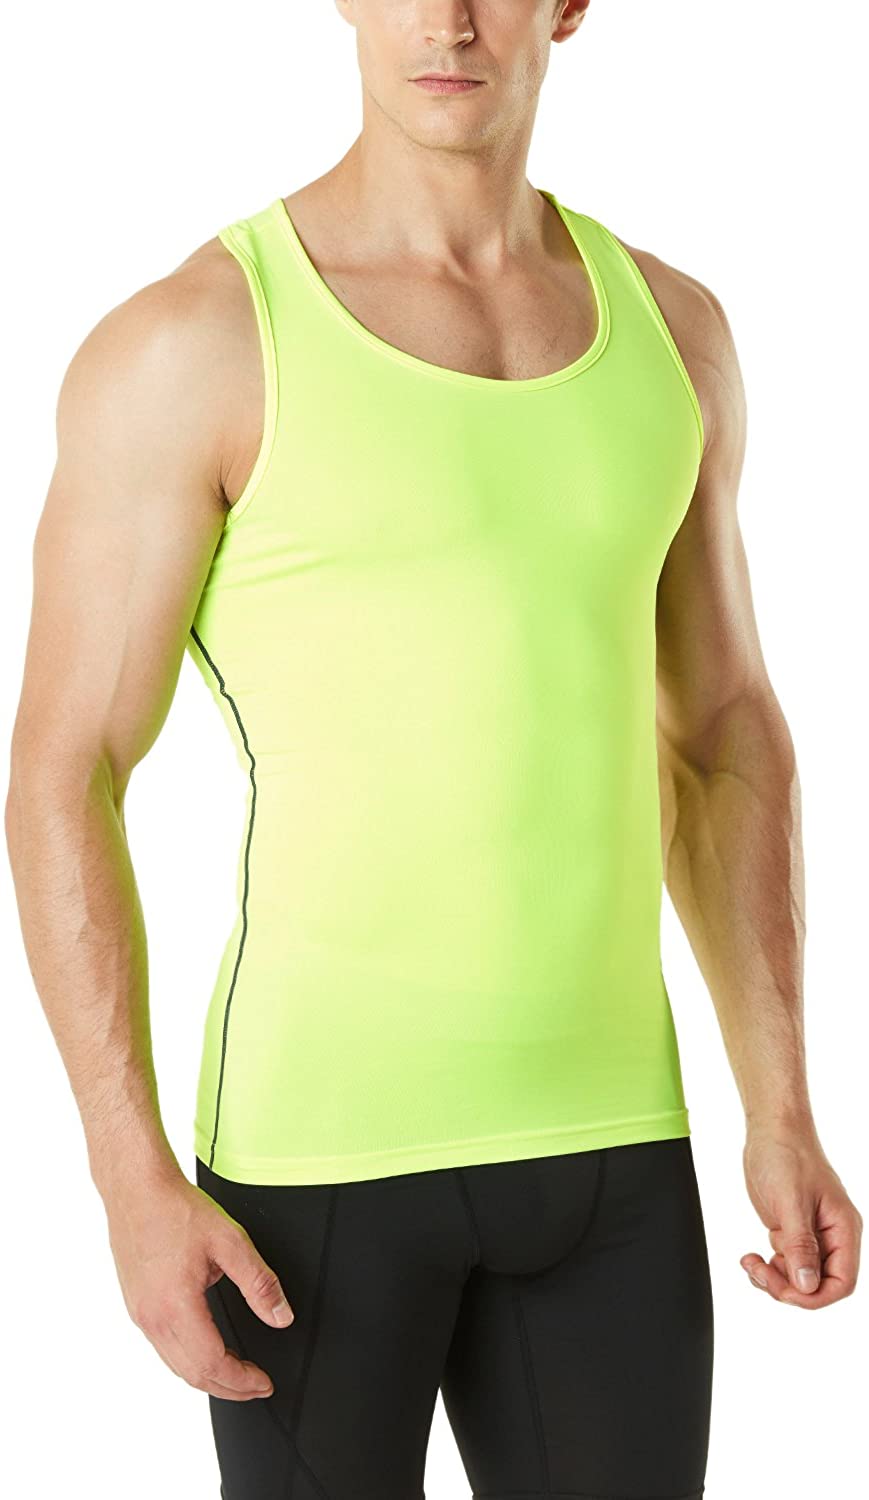 Dry Fit Running Compression Cutoff Shirts TSLA Men's V Neck Sleeveless Workout Shirts Athletic Training Tank Top 